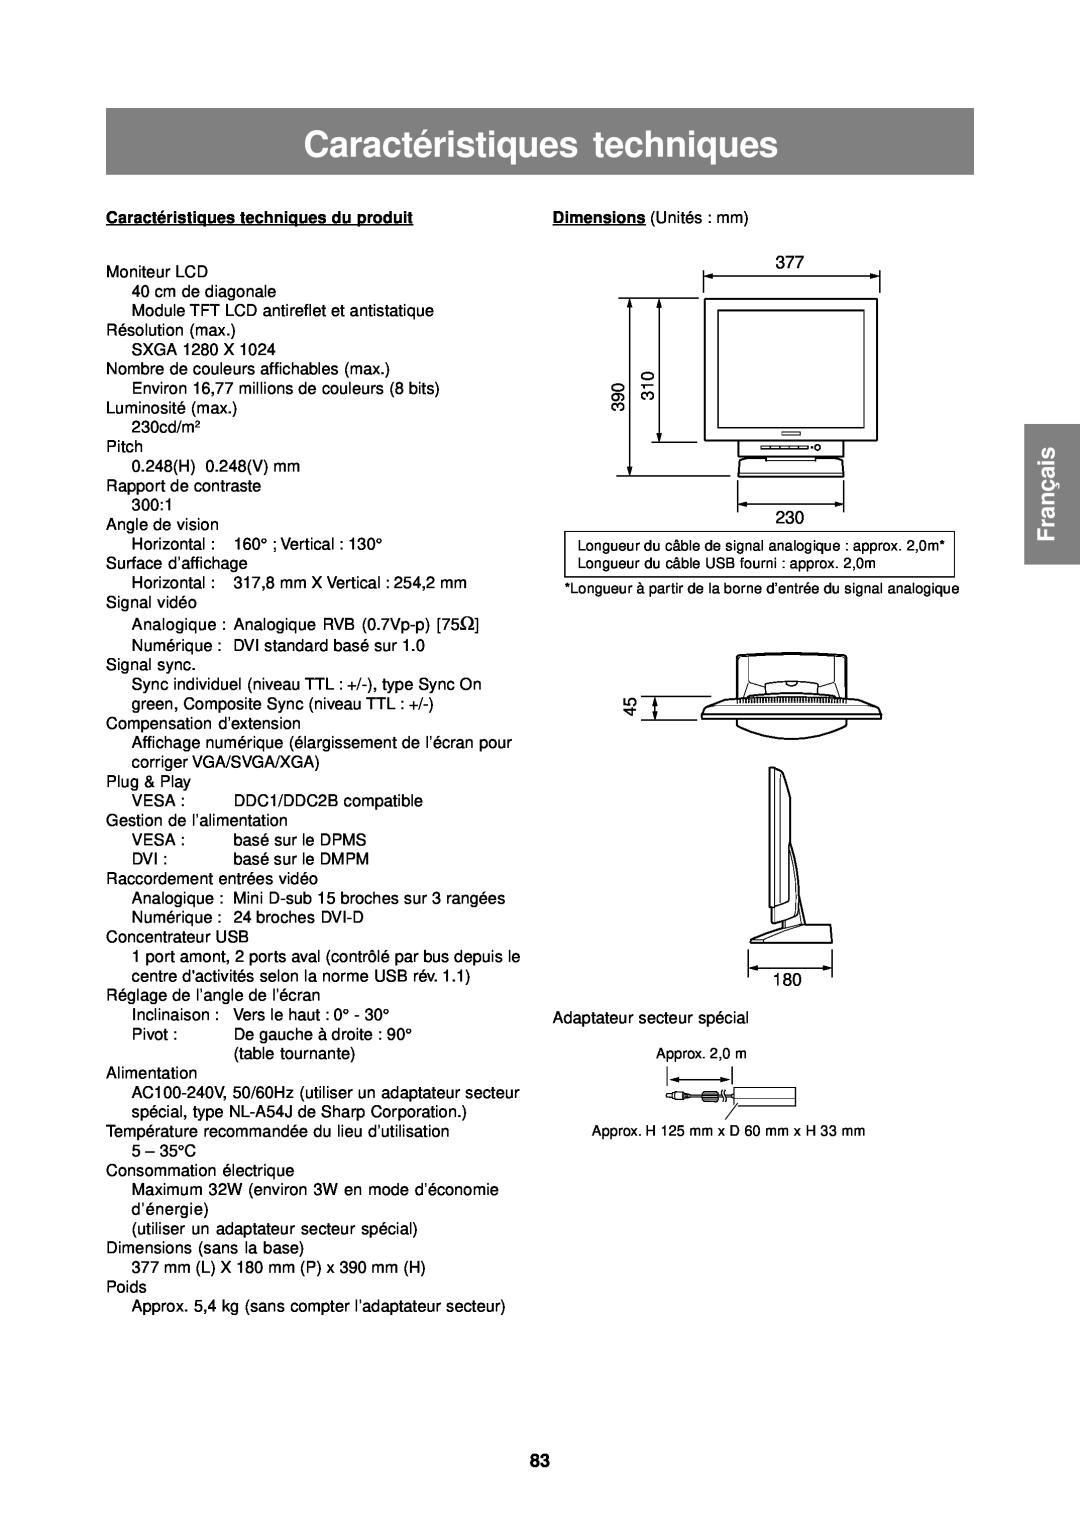 Sharp LL-T1610W operation manual Caractéristiques techniques, Français, Caractéristiques tec hniques du produit 